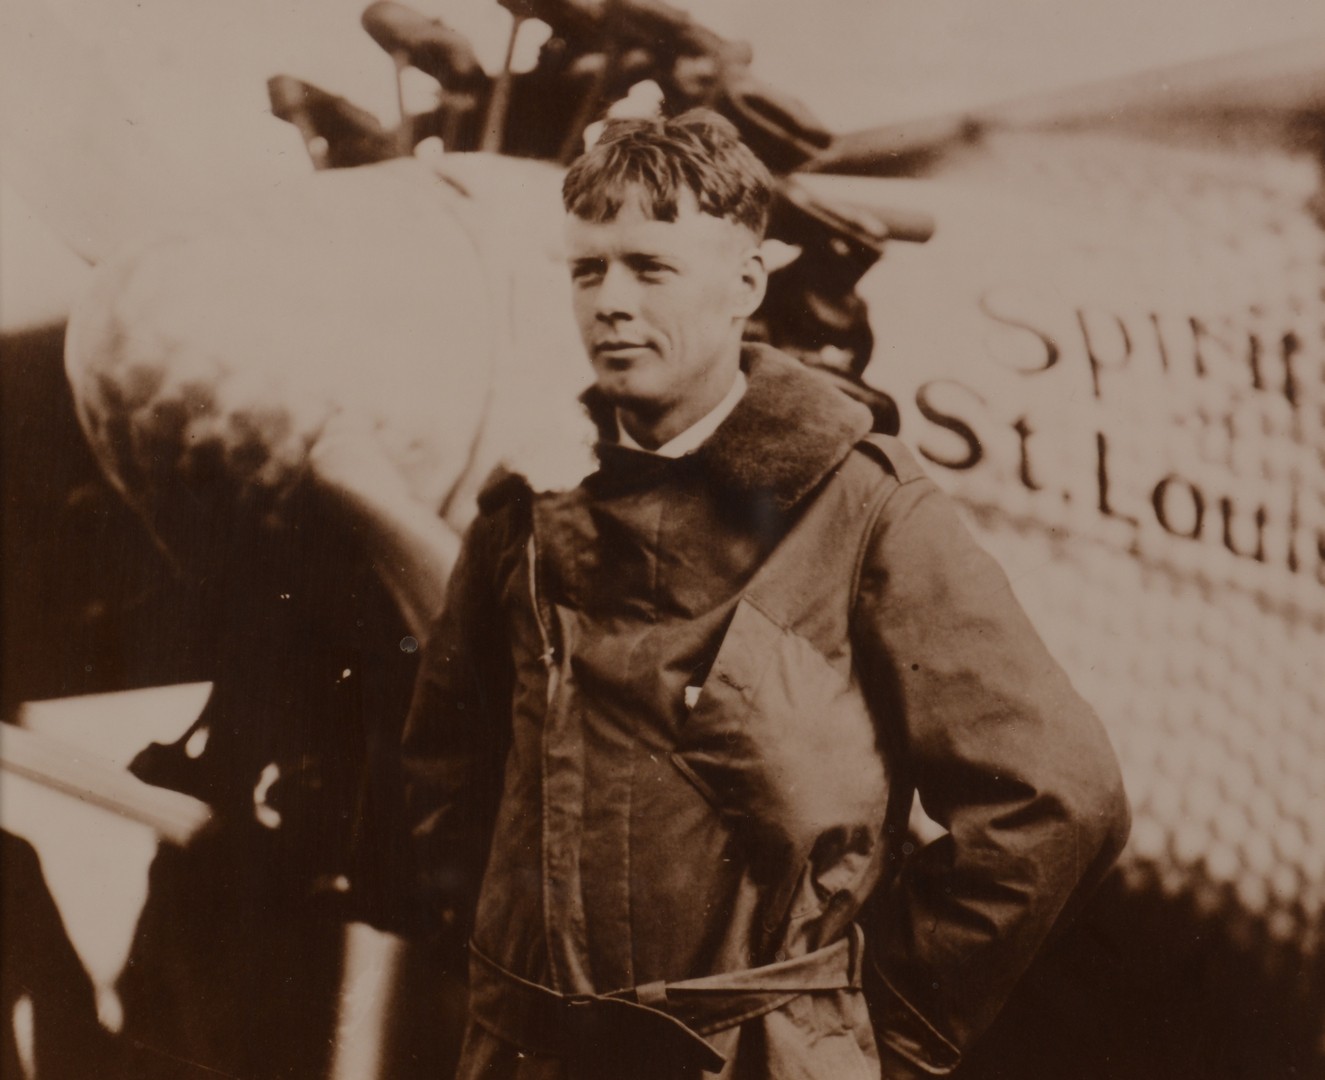 Lot 594: Charles Lindbergh Signed Menu